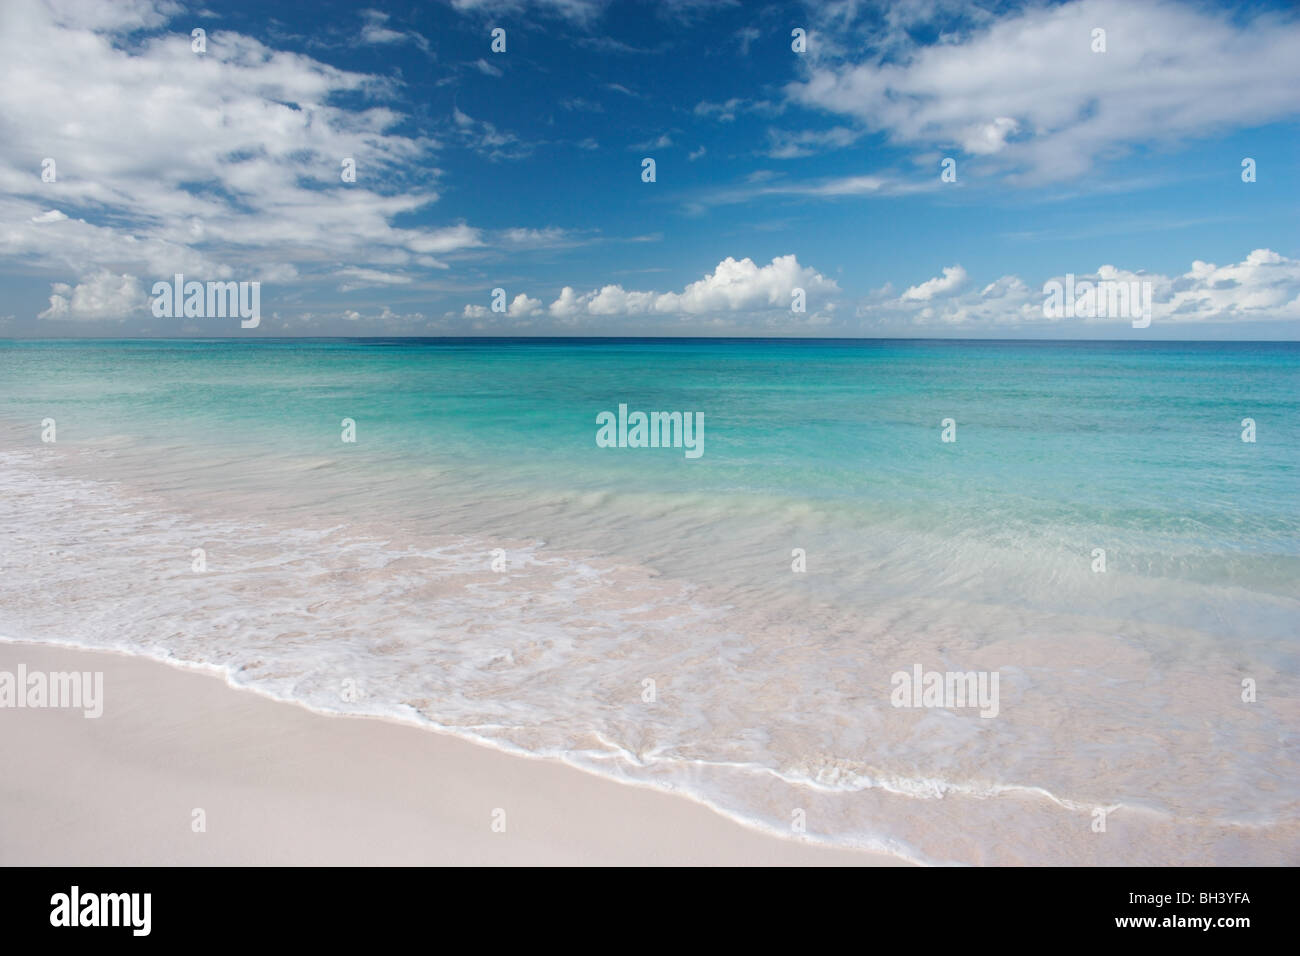 A deserted tropical beach and calm sea Stock Photo